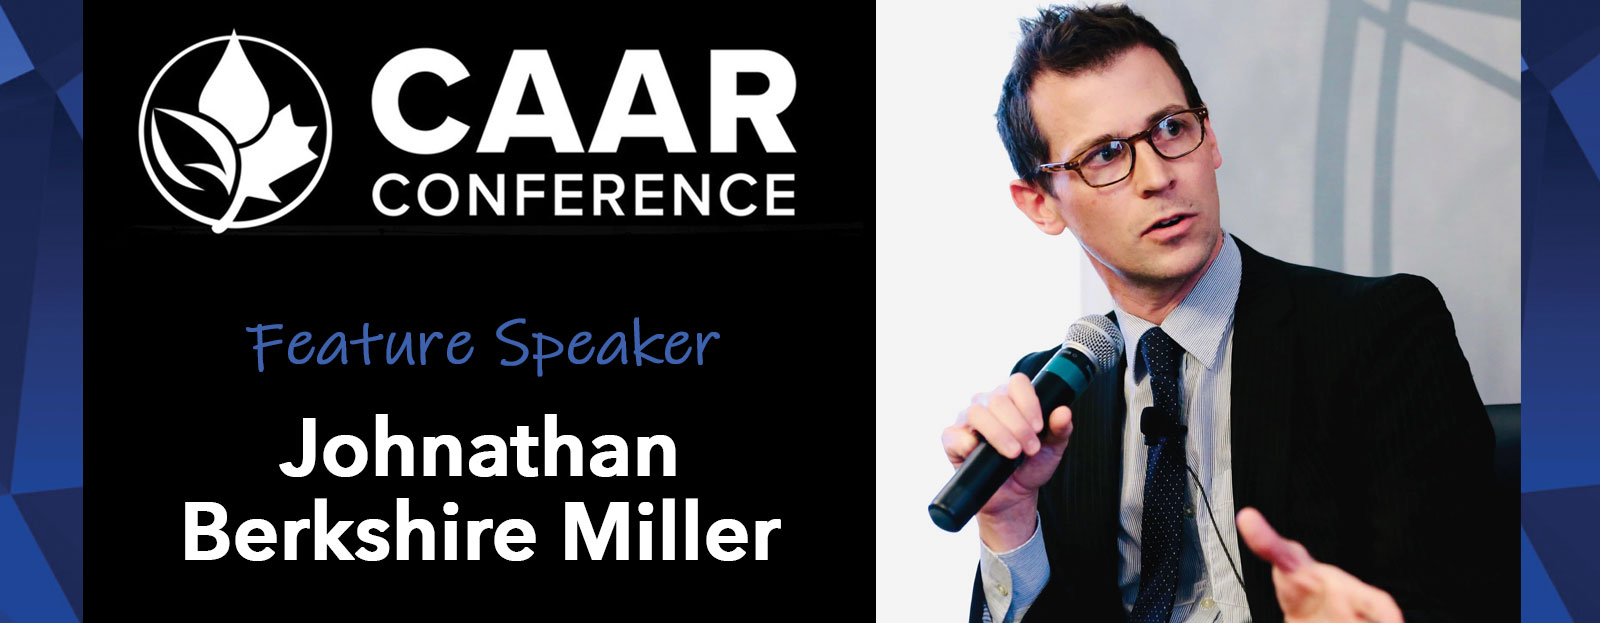 Banner for Thumnail for CAAR Conference featured speaker Johnathan Berkshire Miller